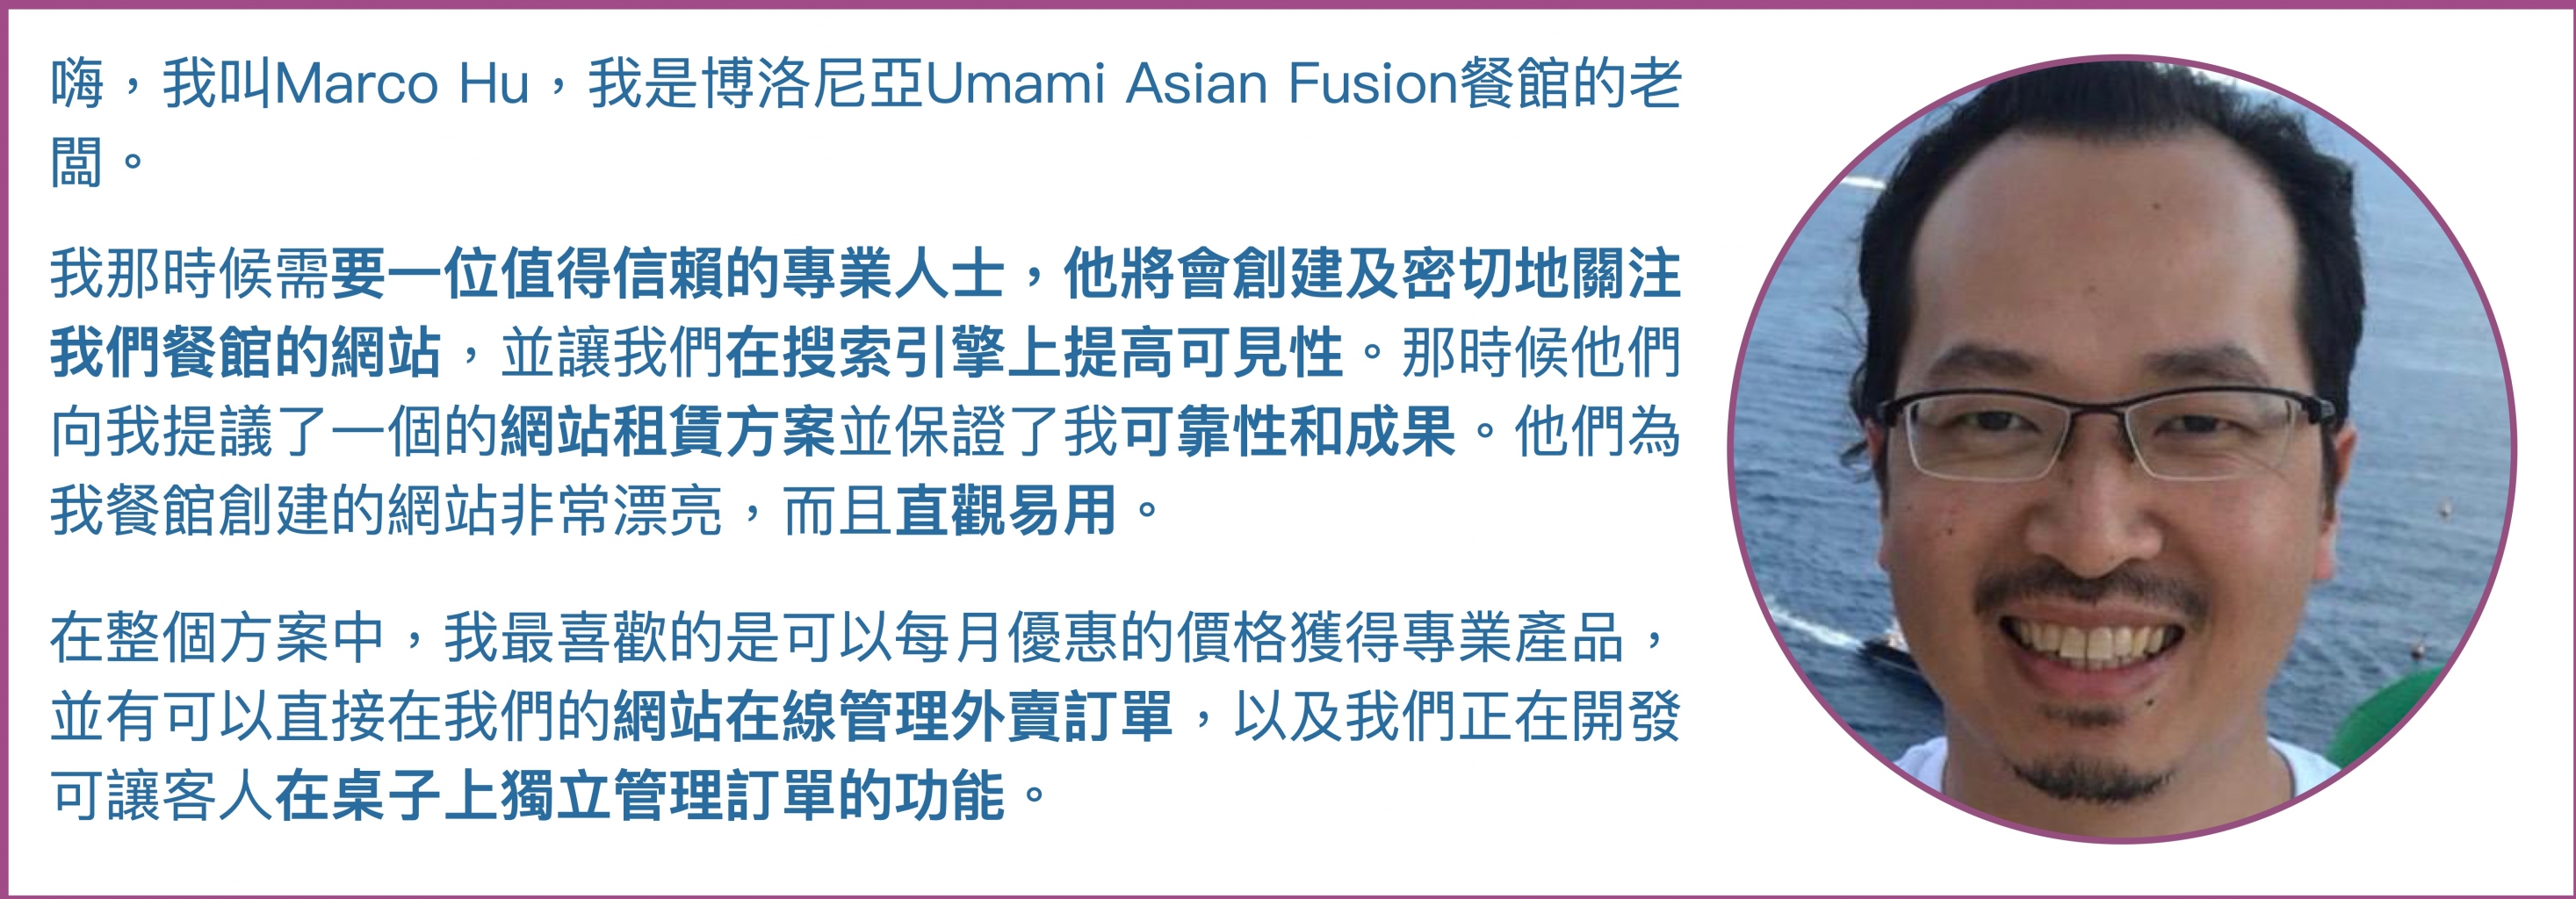 Marco Hu - Umami Asian Fusion